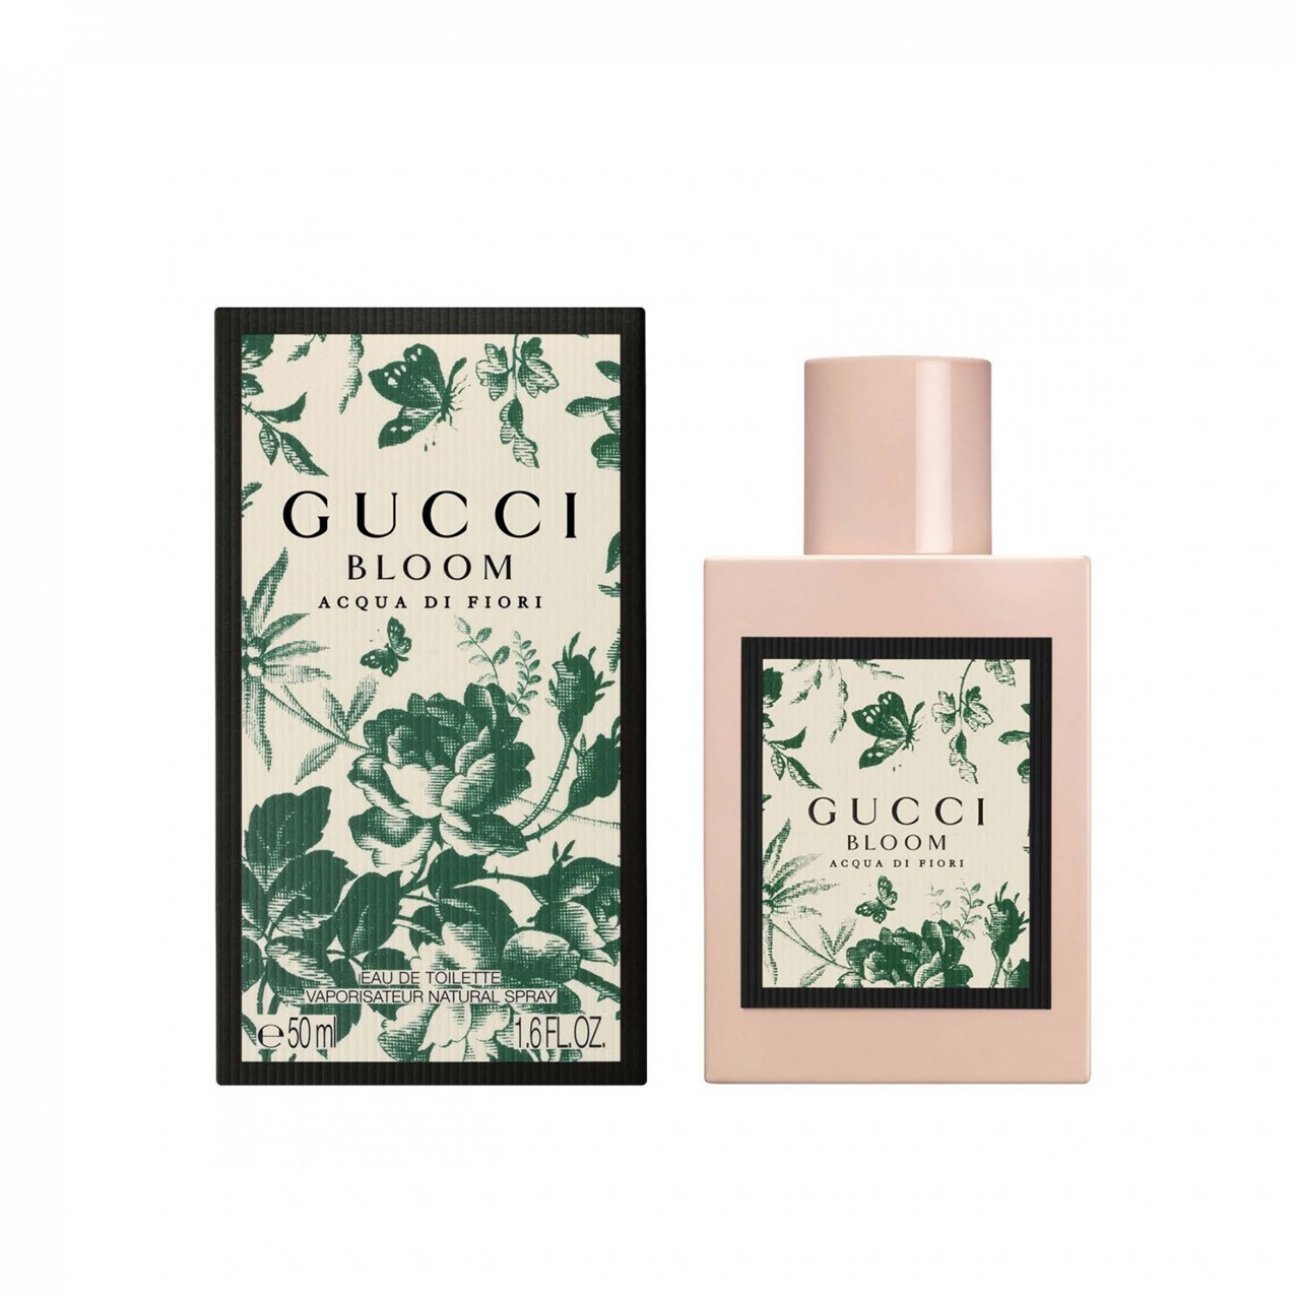 Tact krijgen intellectueel Buy Gucci Bloom Acqua Di Fiori Eau de Toilette 50ml (1.7fl oz) · USA